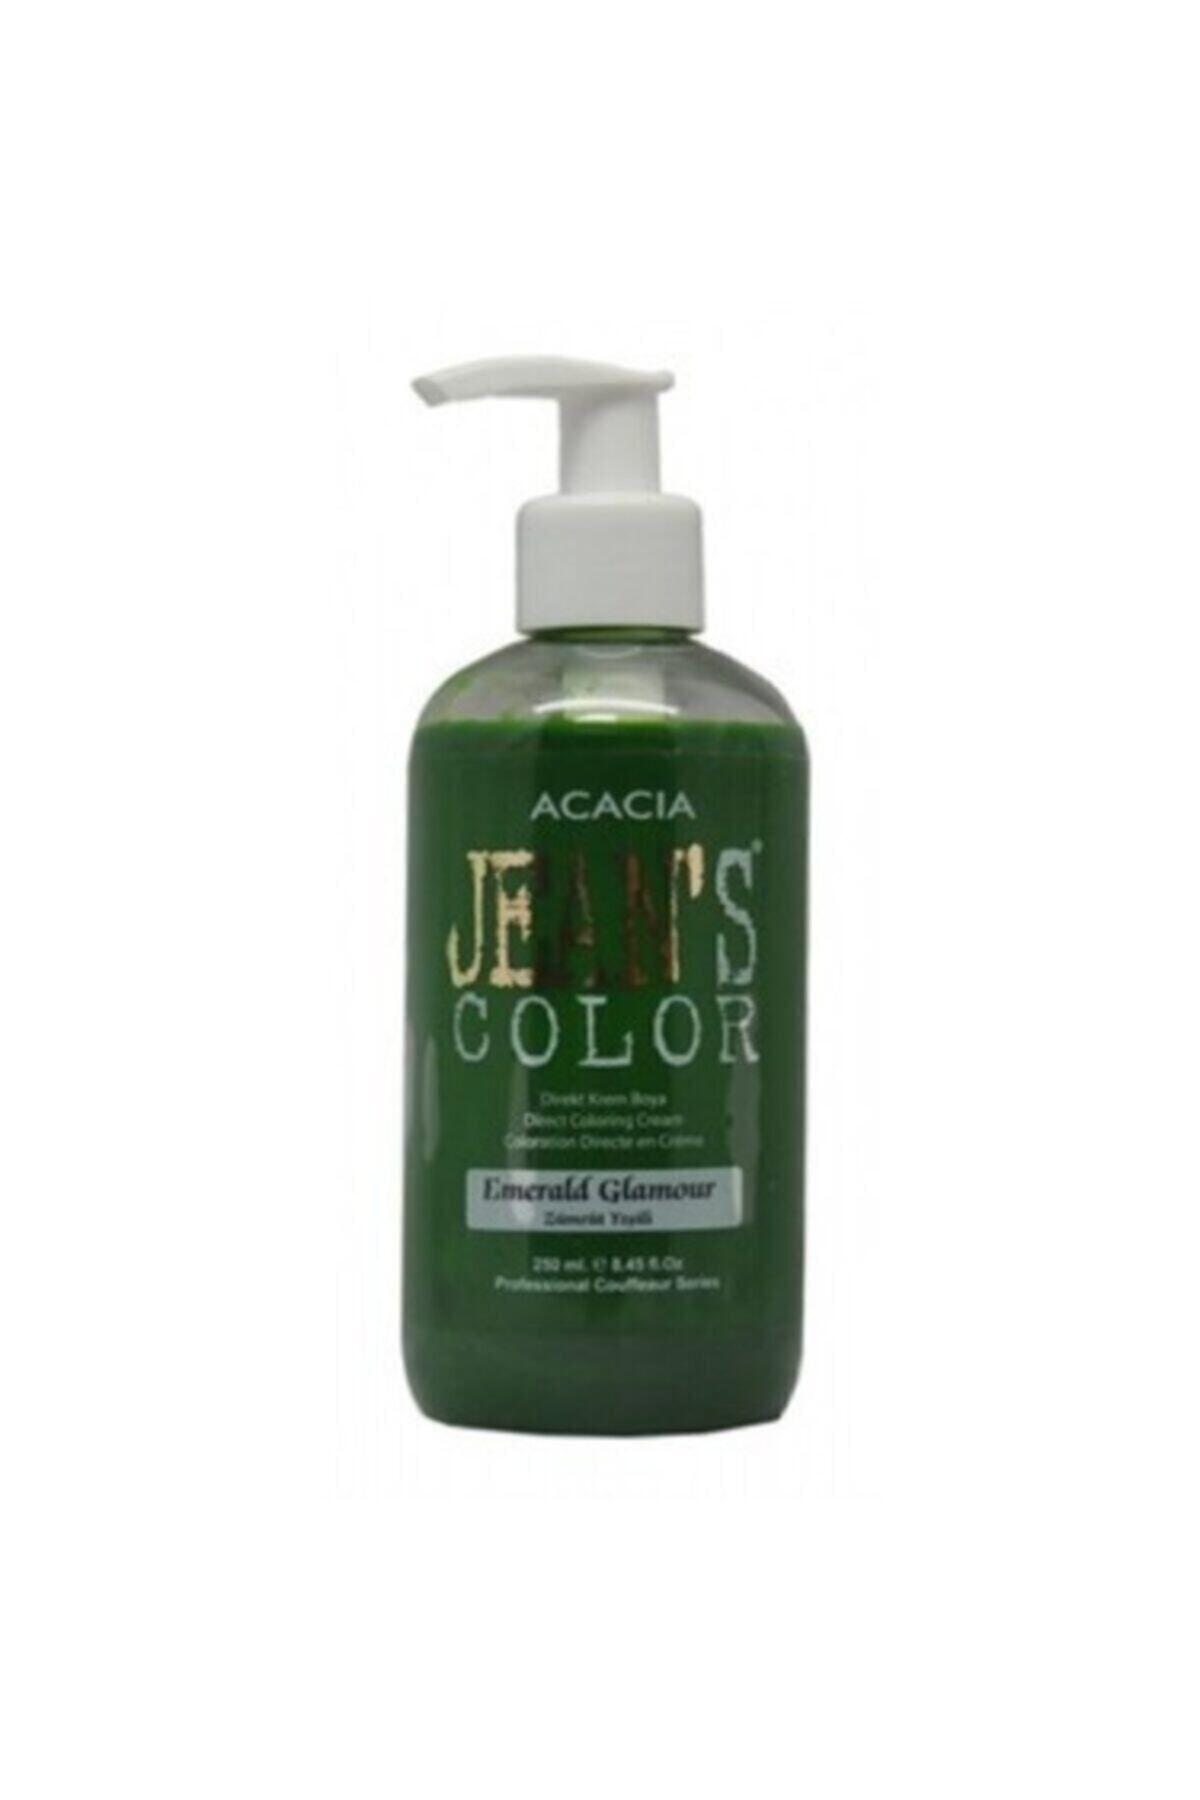 Acacia Jean's Color Zümrüt Yeşili (emerald Glamour) 250ml